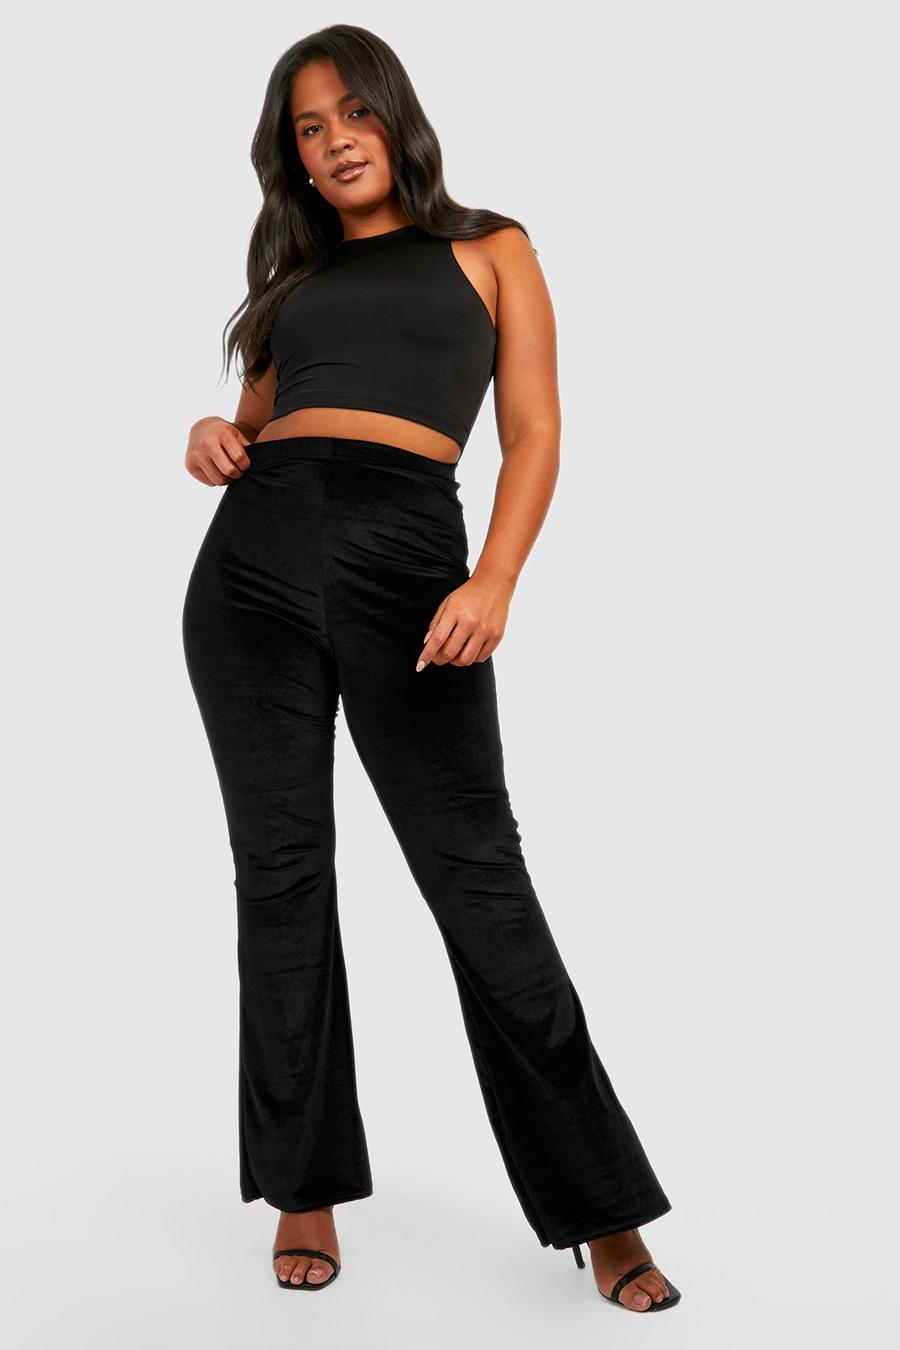 Fashion (Black Long Velvet 2)Plus Size Slit Black Flare Pants For